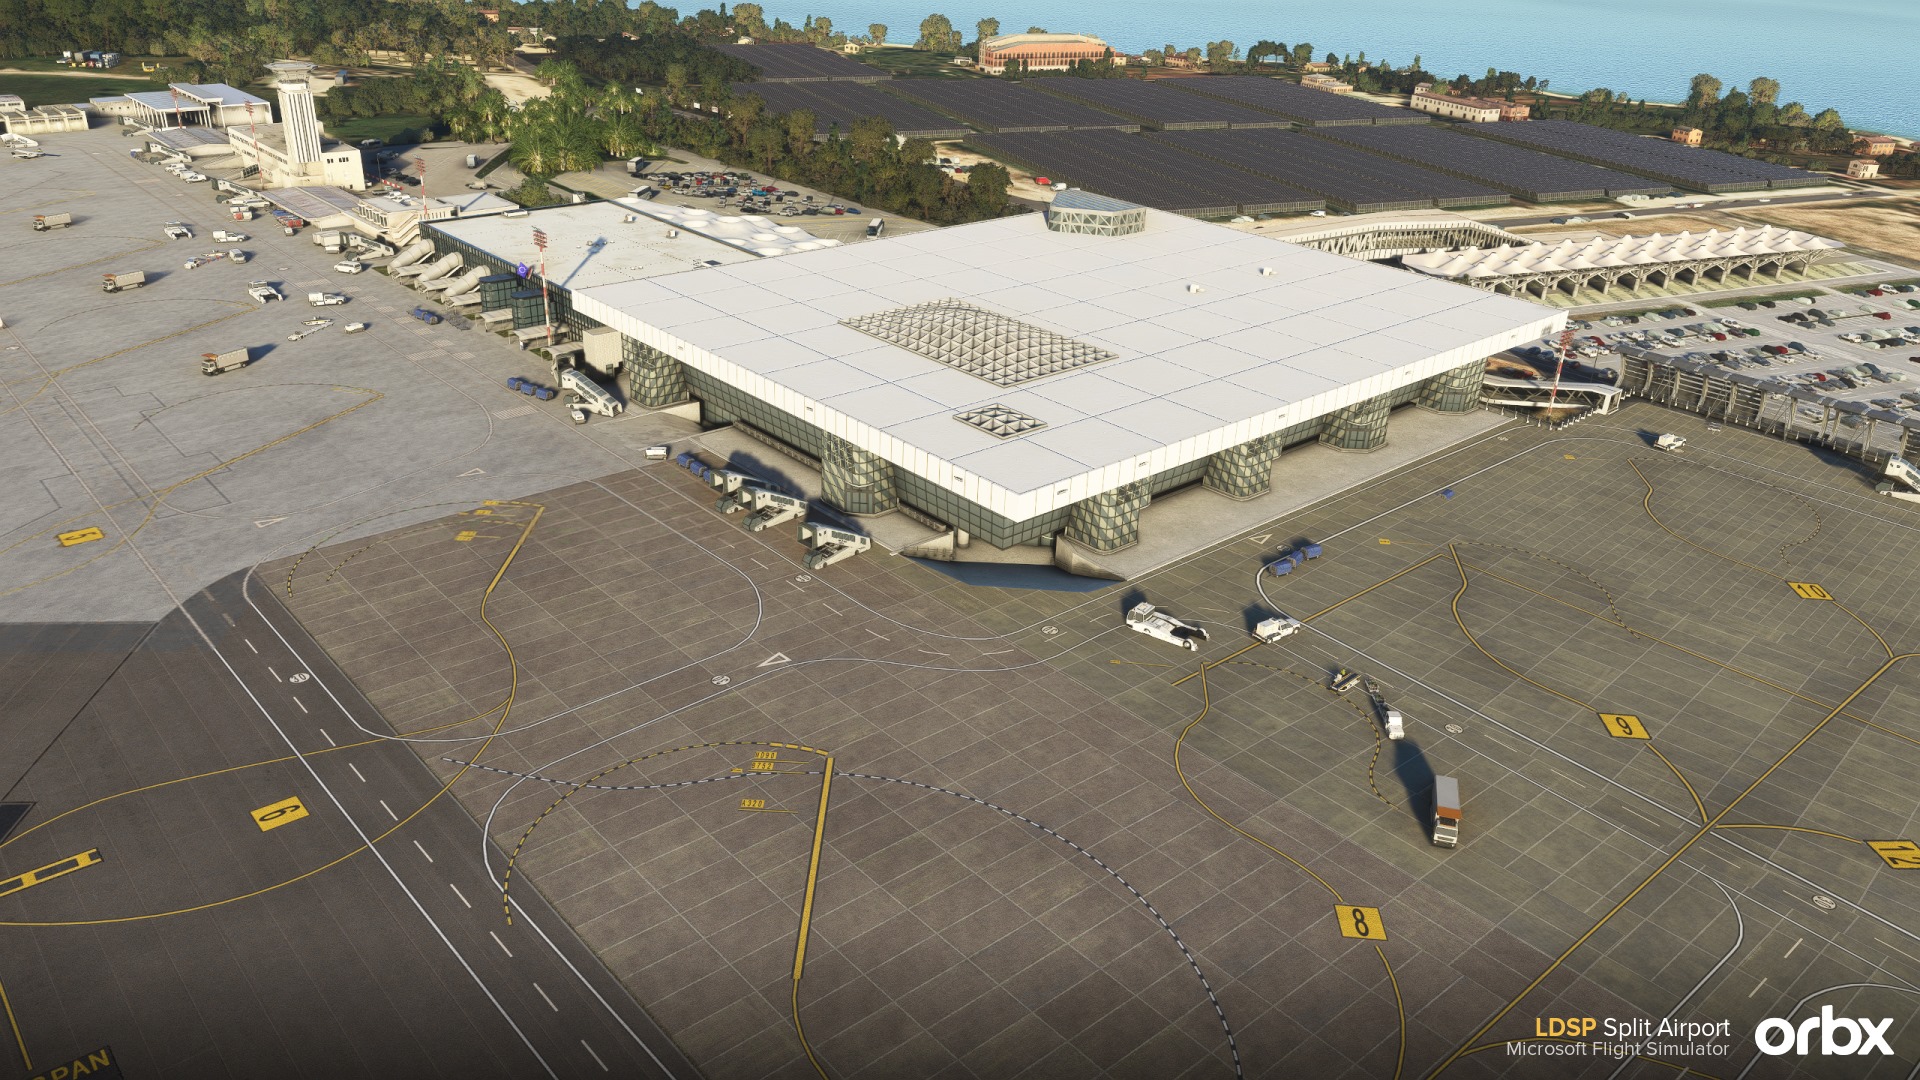 Orbx Announces Split Airport for MSFS - Microsoft Flight Simulator, Orbx